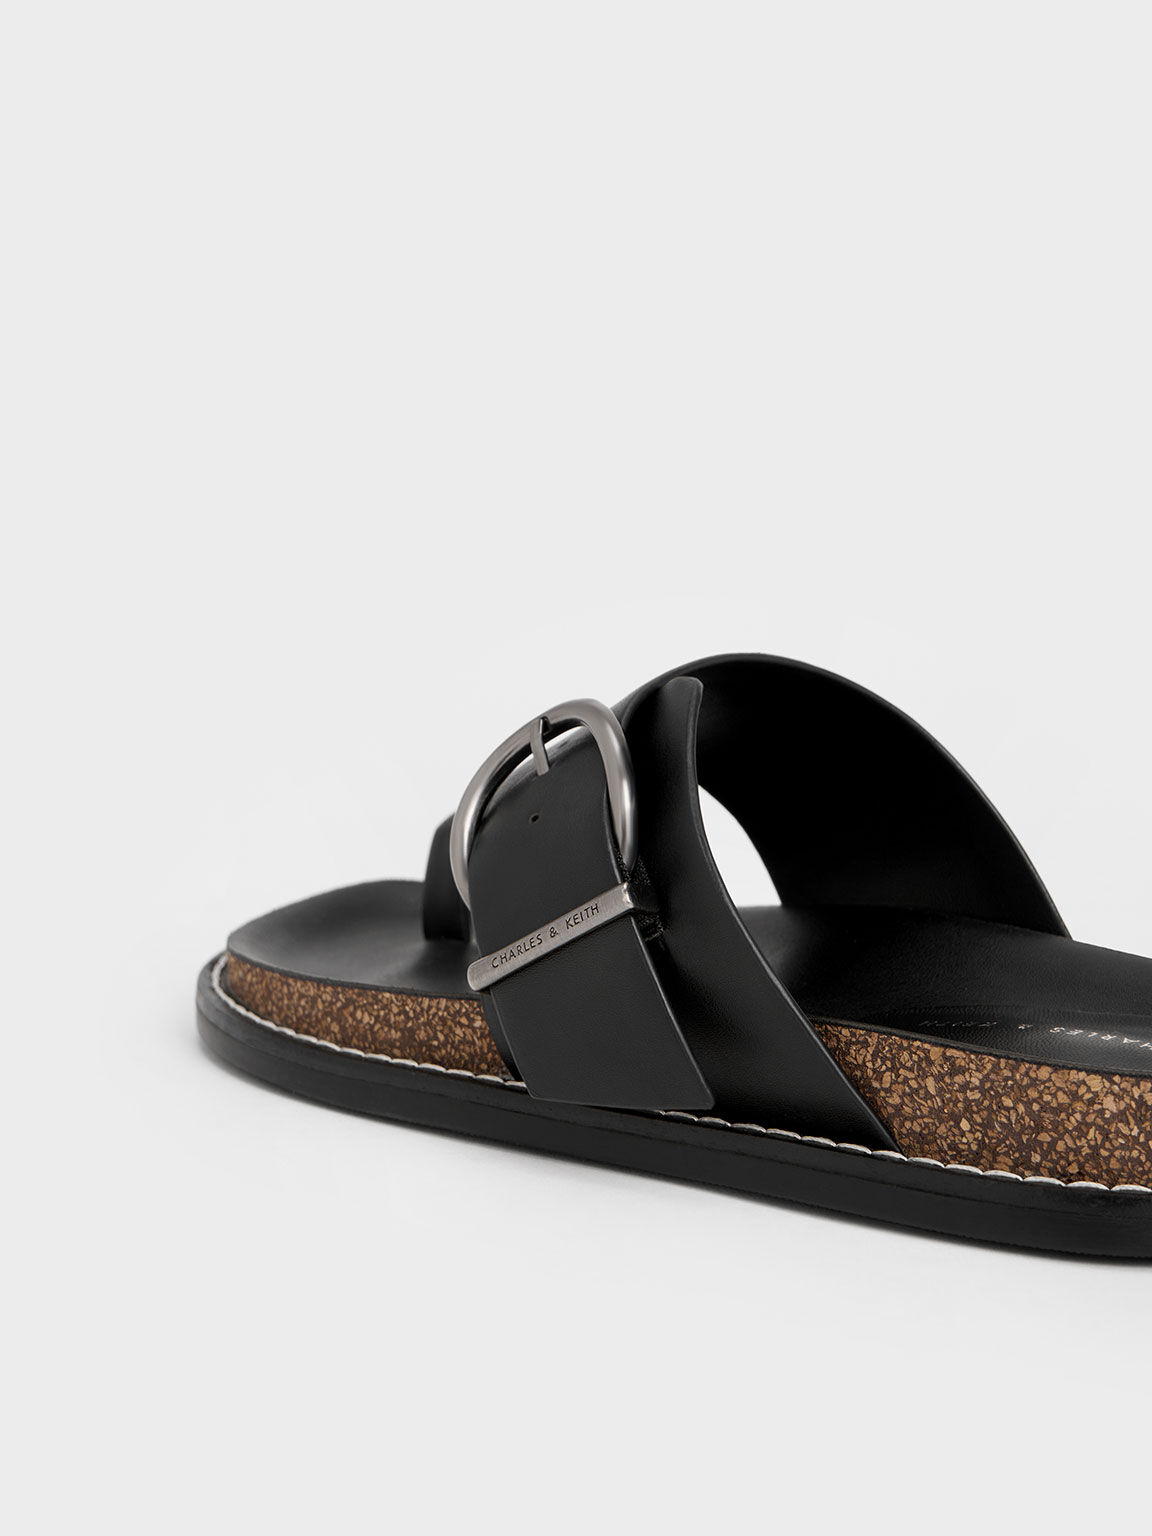 Metallic Buckle Toe-Ring Sandals, Black, hi-res